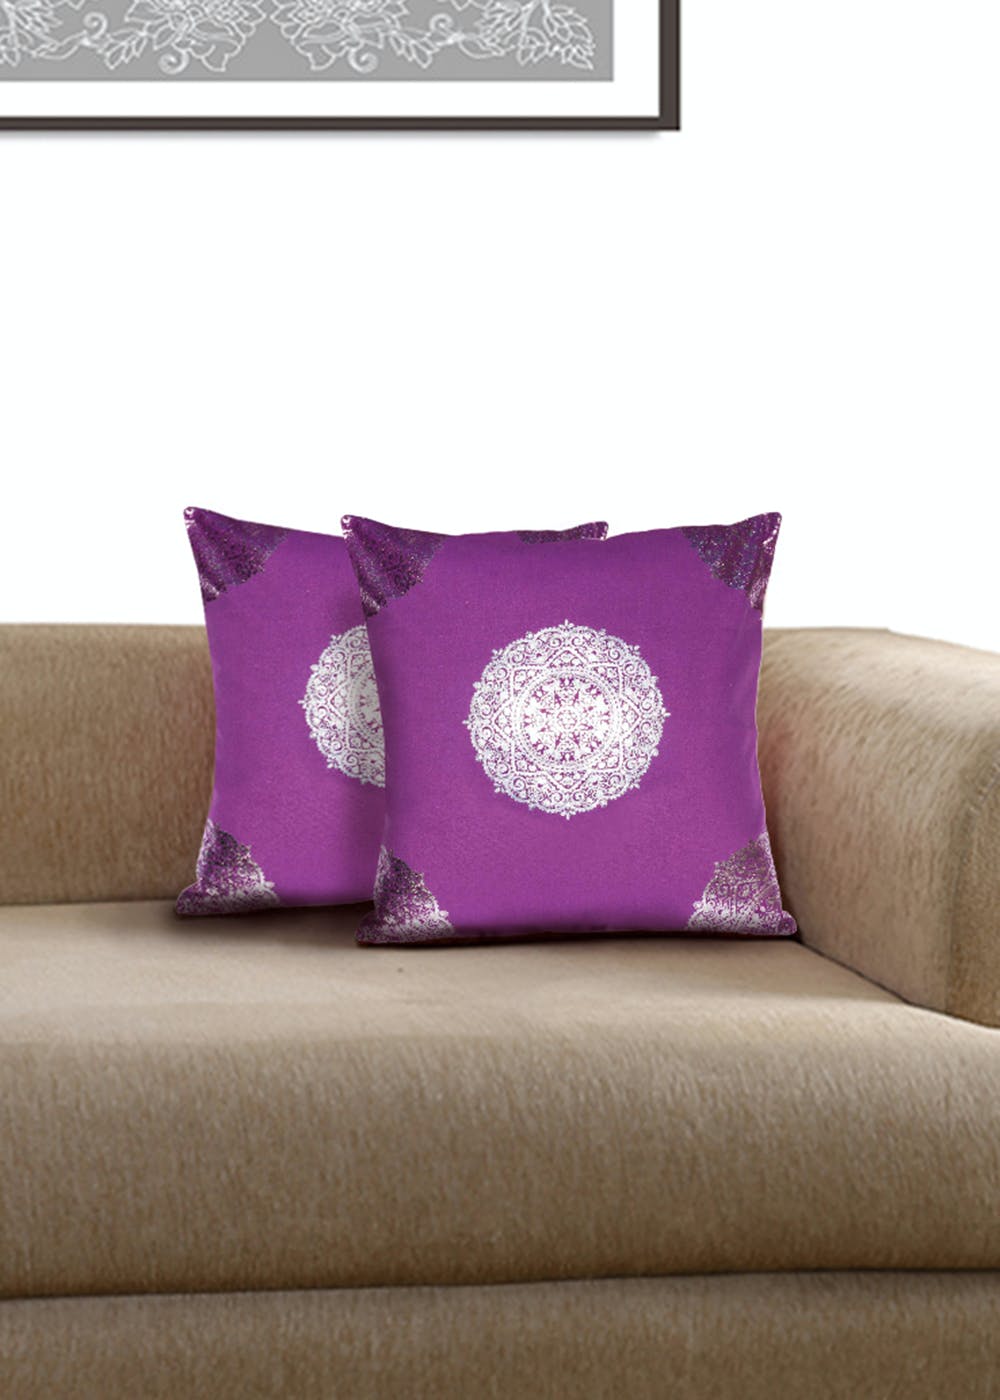 Get Set Of 2 Ethnic Mandala Floral Printed Purple Cushion Covers At ₹ 660 Lbb Shop